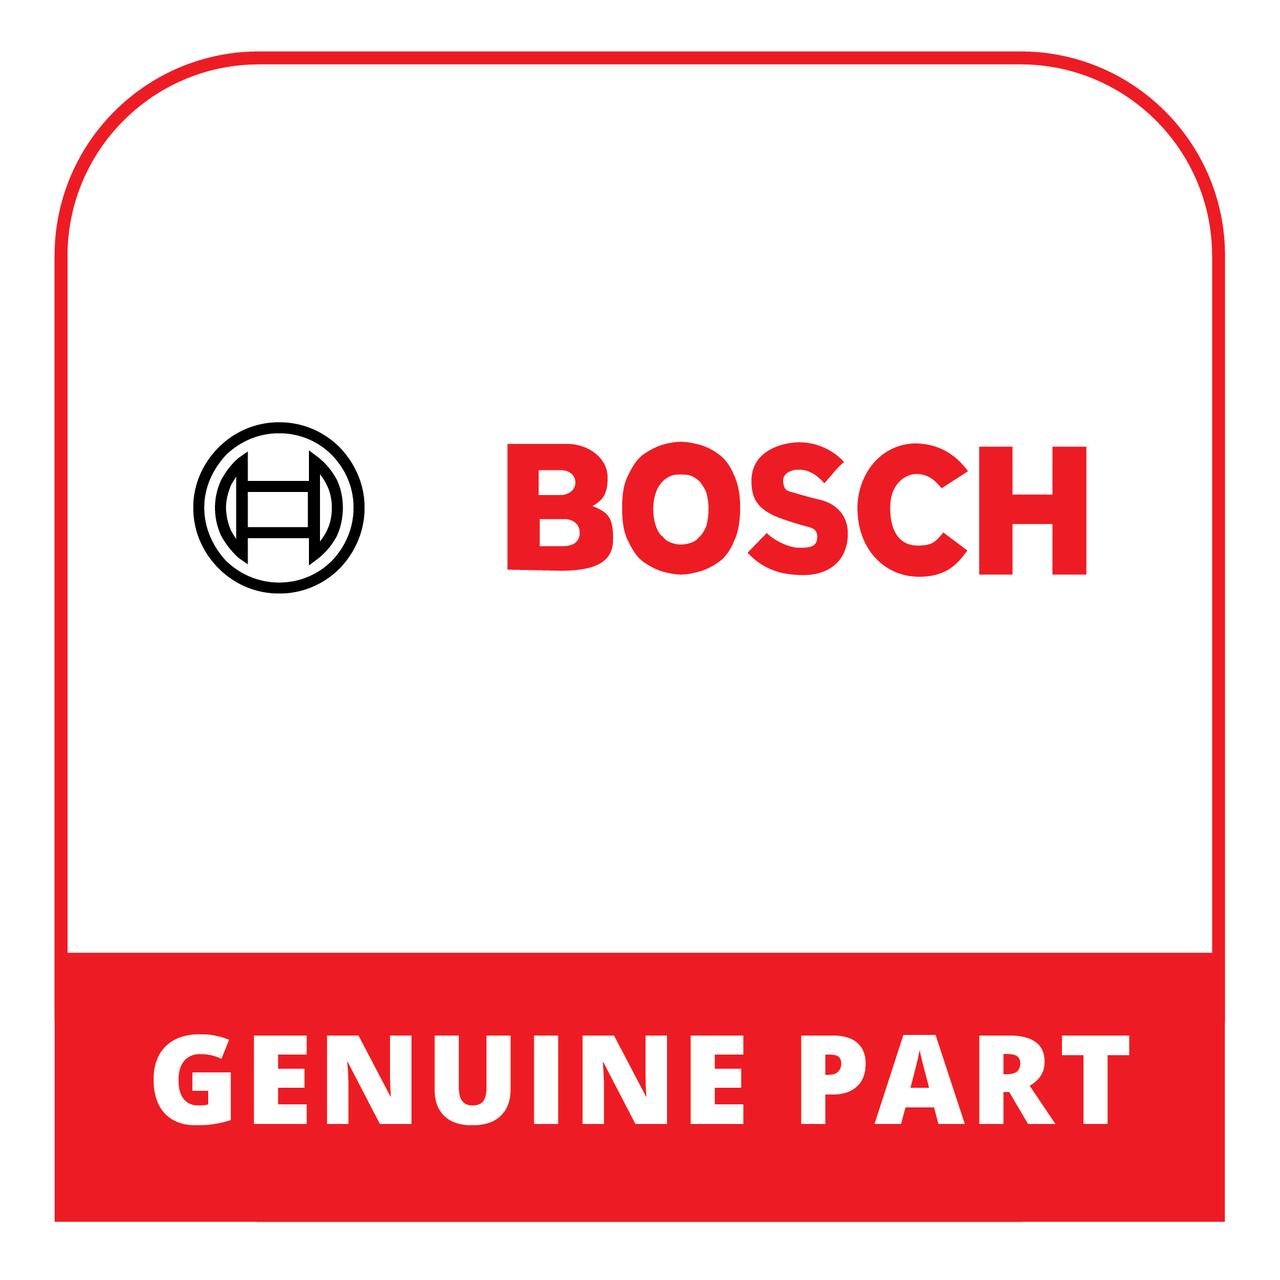 Bosch (Thermador) 20000551 - Shelf - Genuine Bosch (Thermador) Part